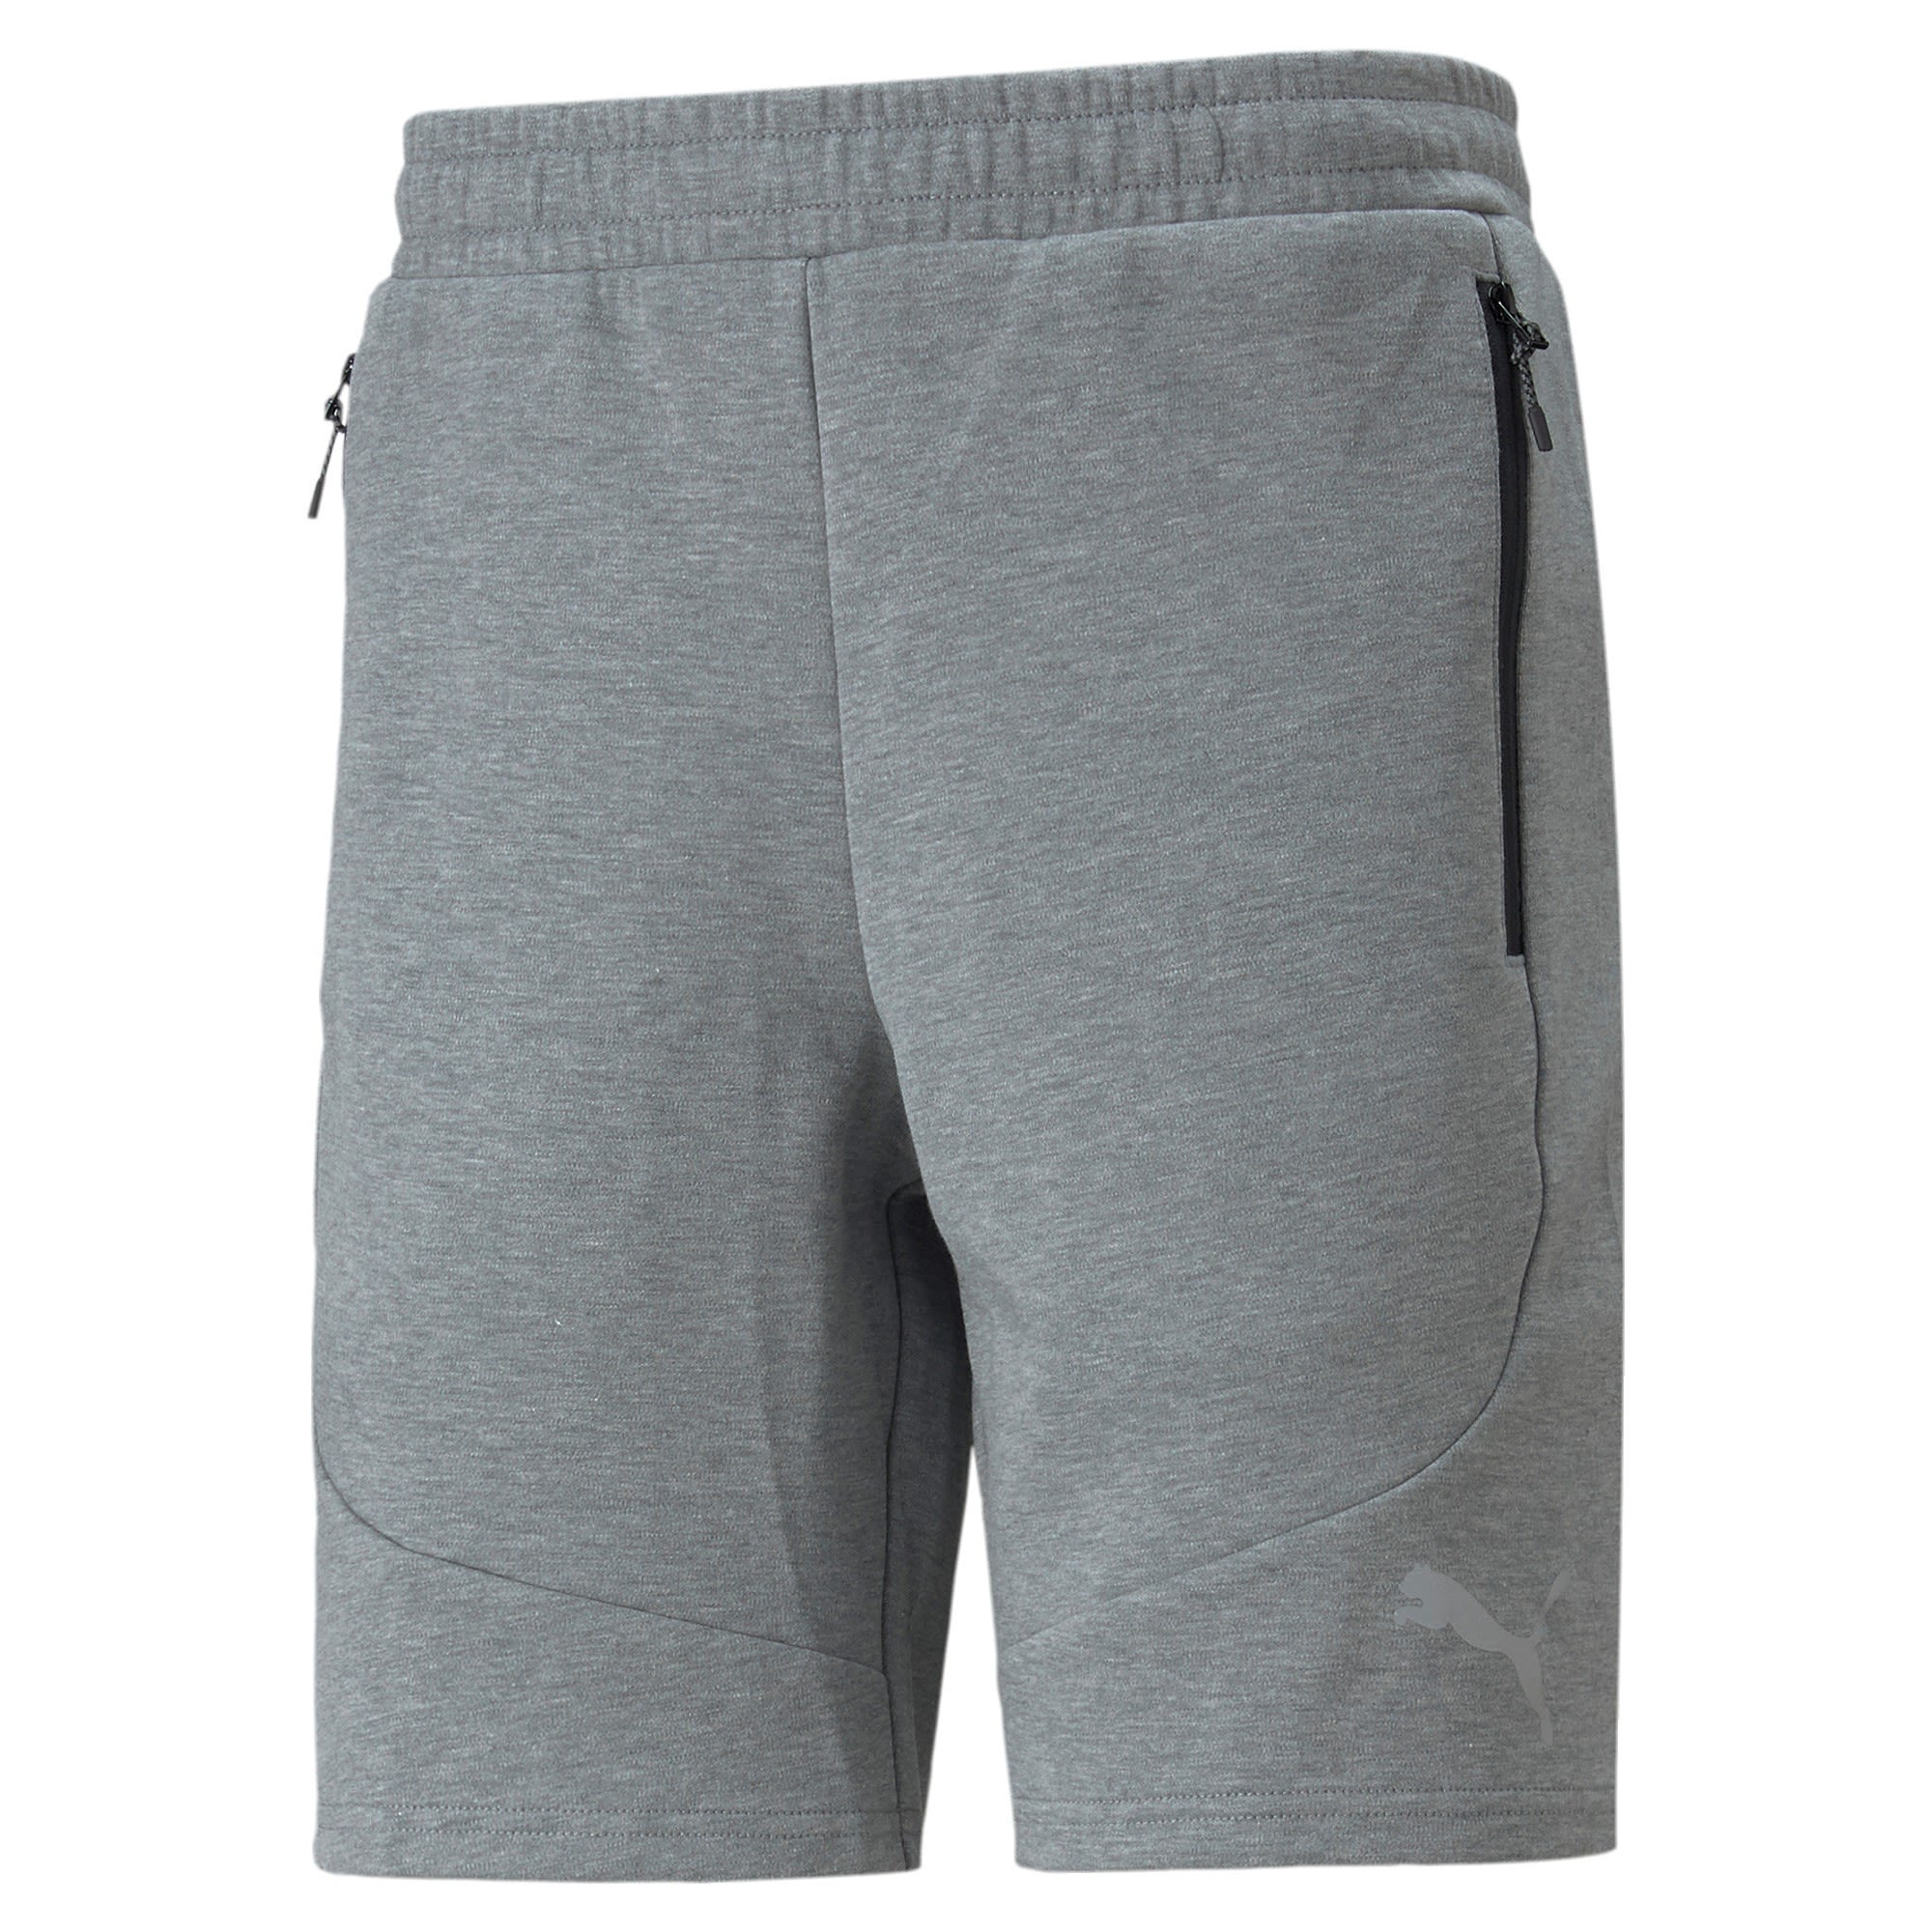 Puma Evostripe Shorts Grau- Male Shorts- Grsse S - Farbe Medium Gray Heather